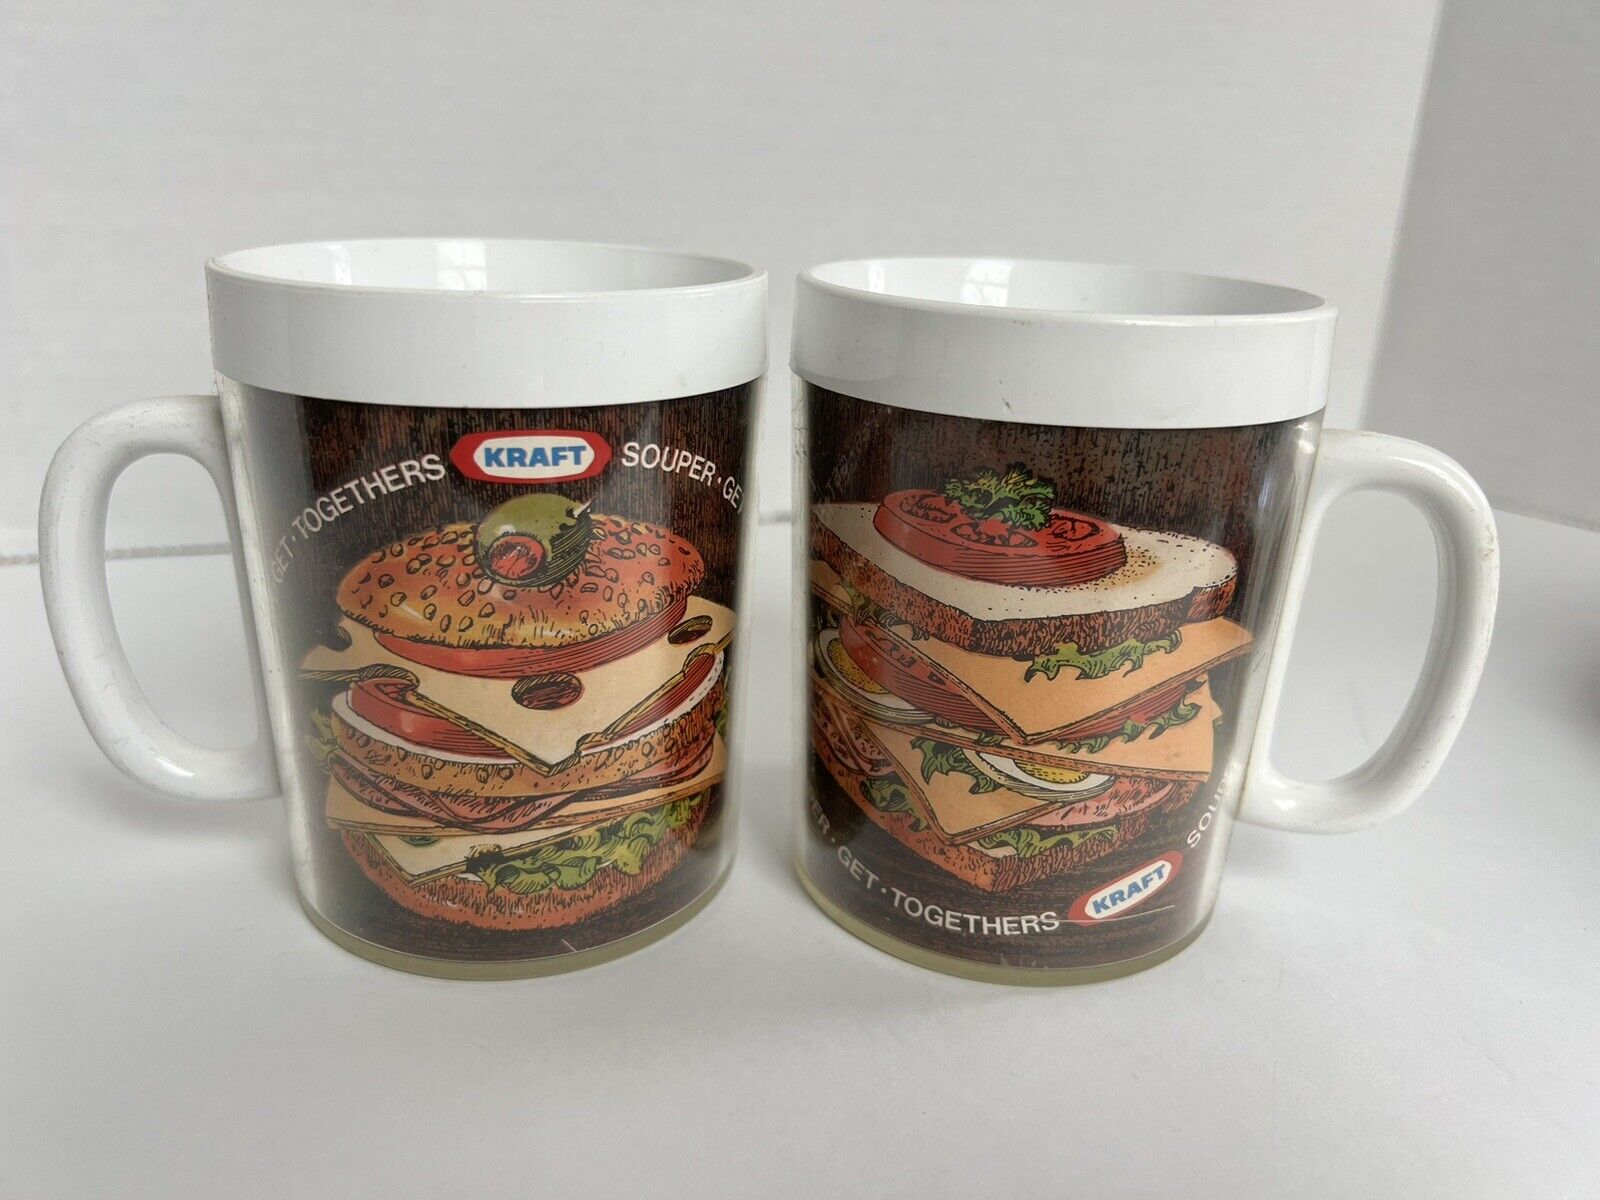 2 Vintage Kraft Souper Thermo Serv Mugs, Advertising Mail In Promo Rare